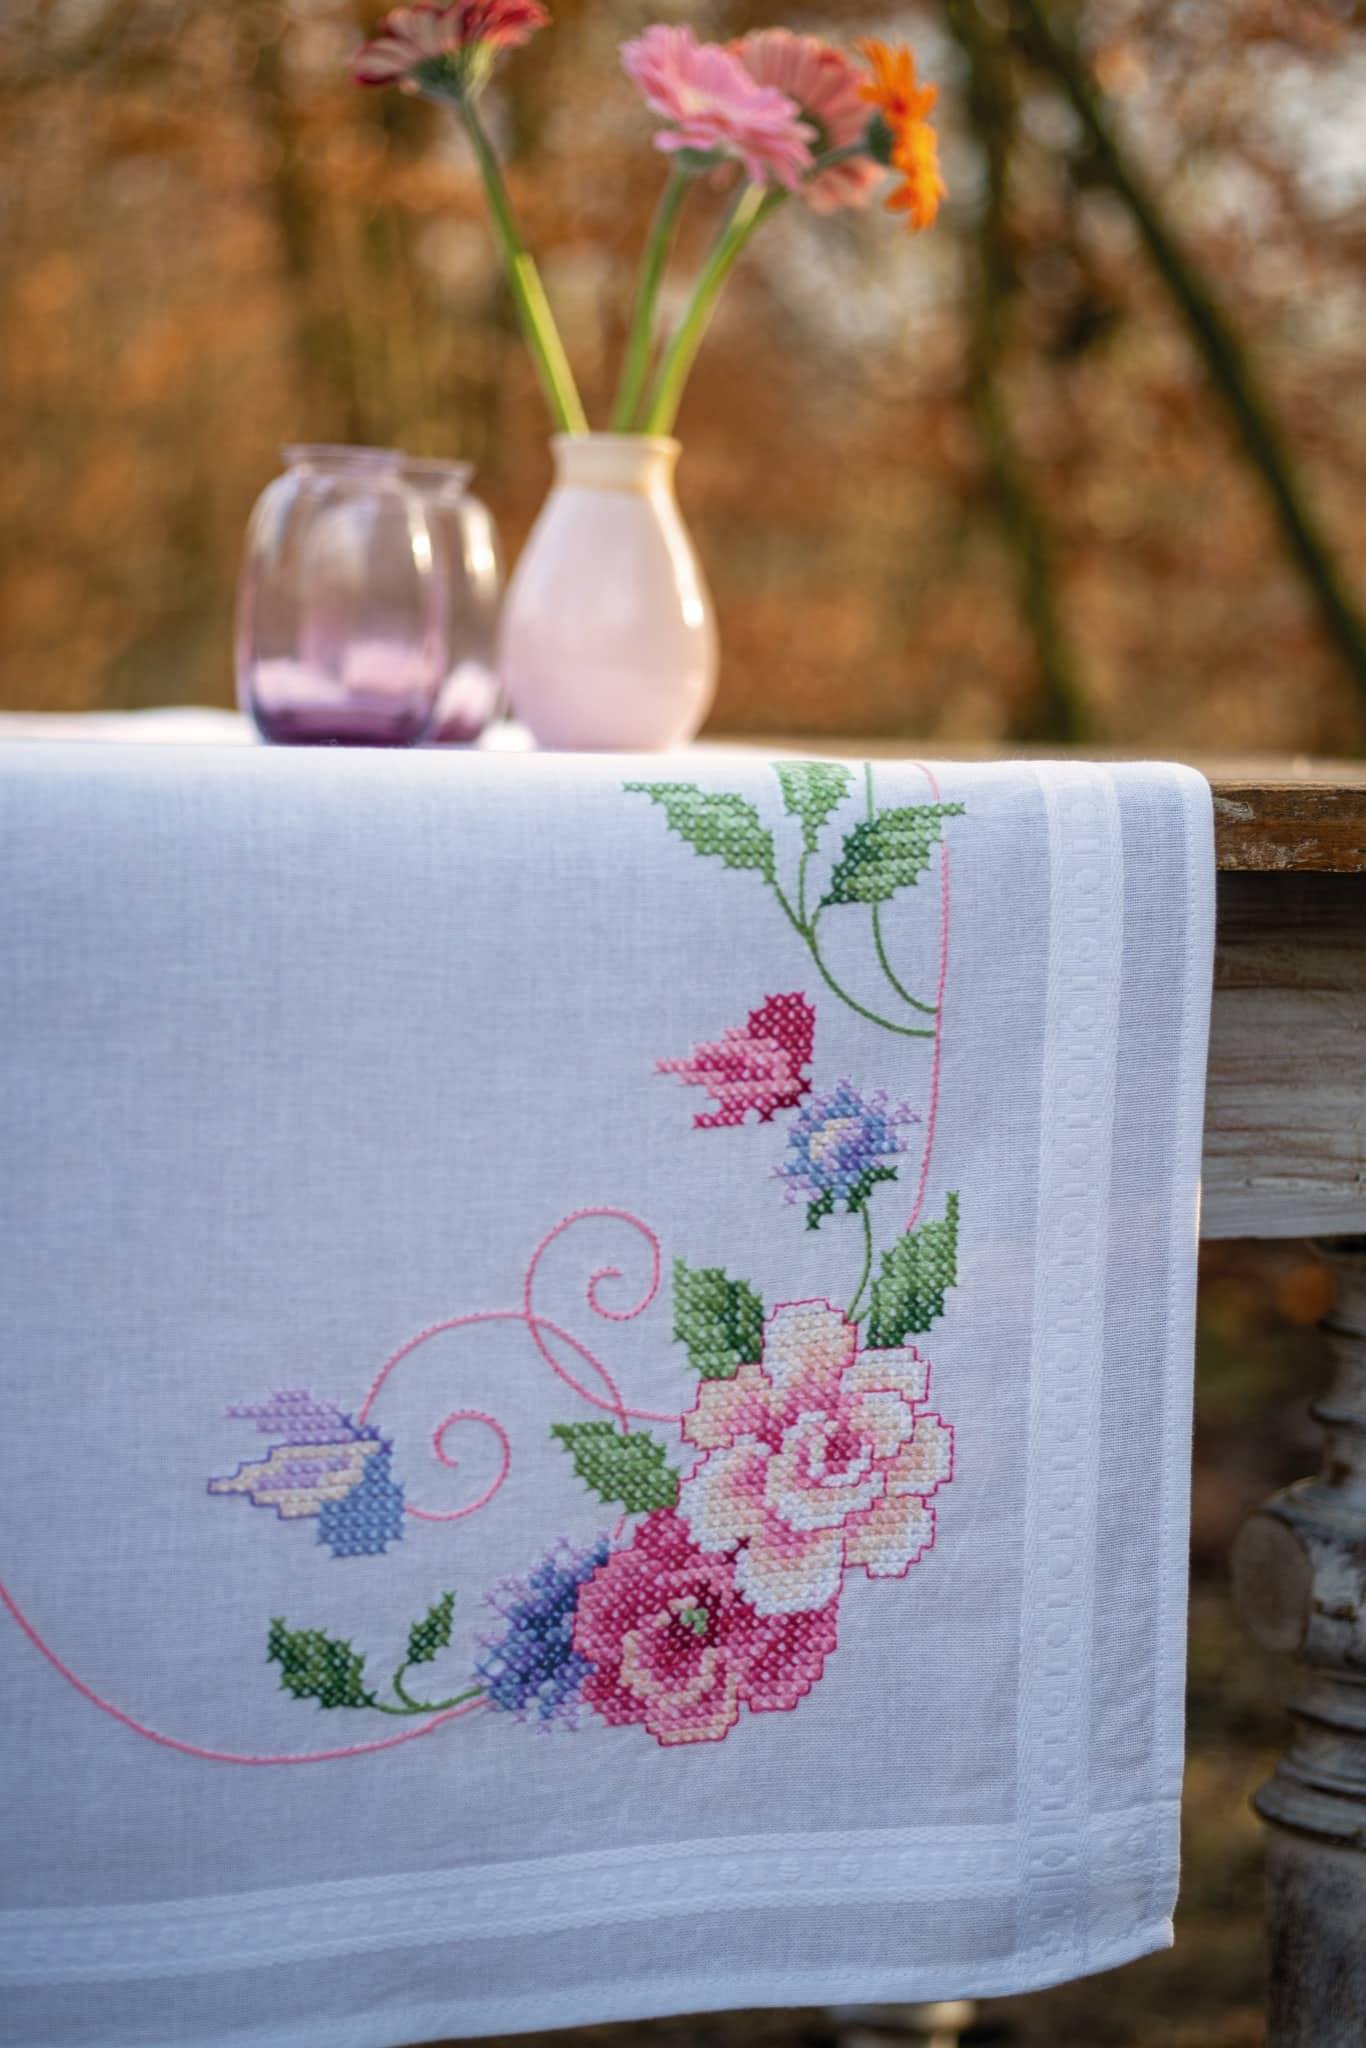 Vervaco Flowers & Butterflies Table Runner Embroidery Kit - Woolshop.co.uk